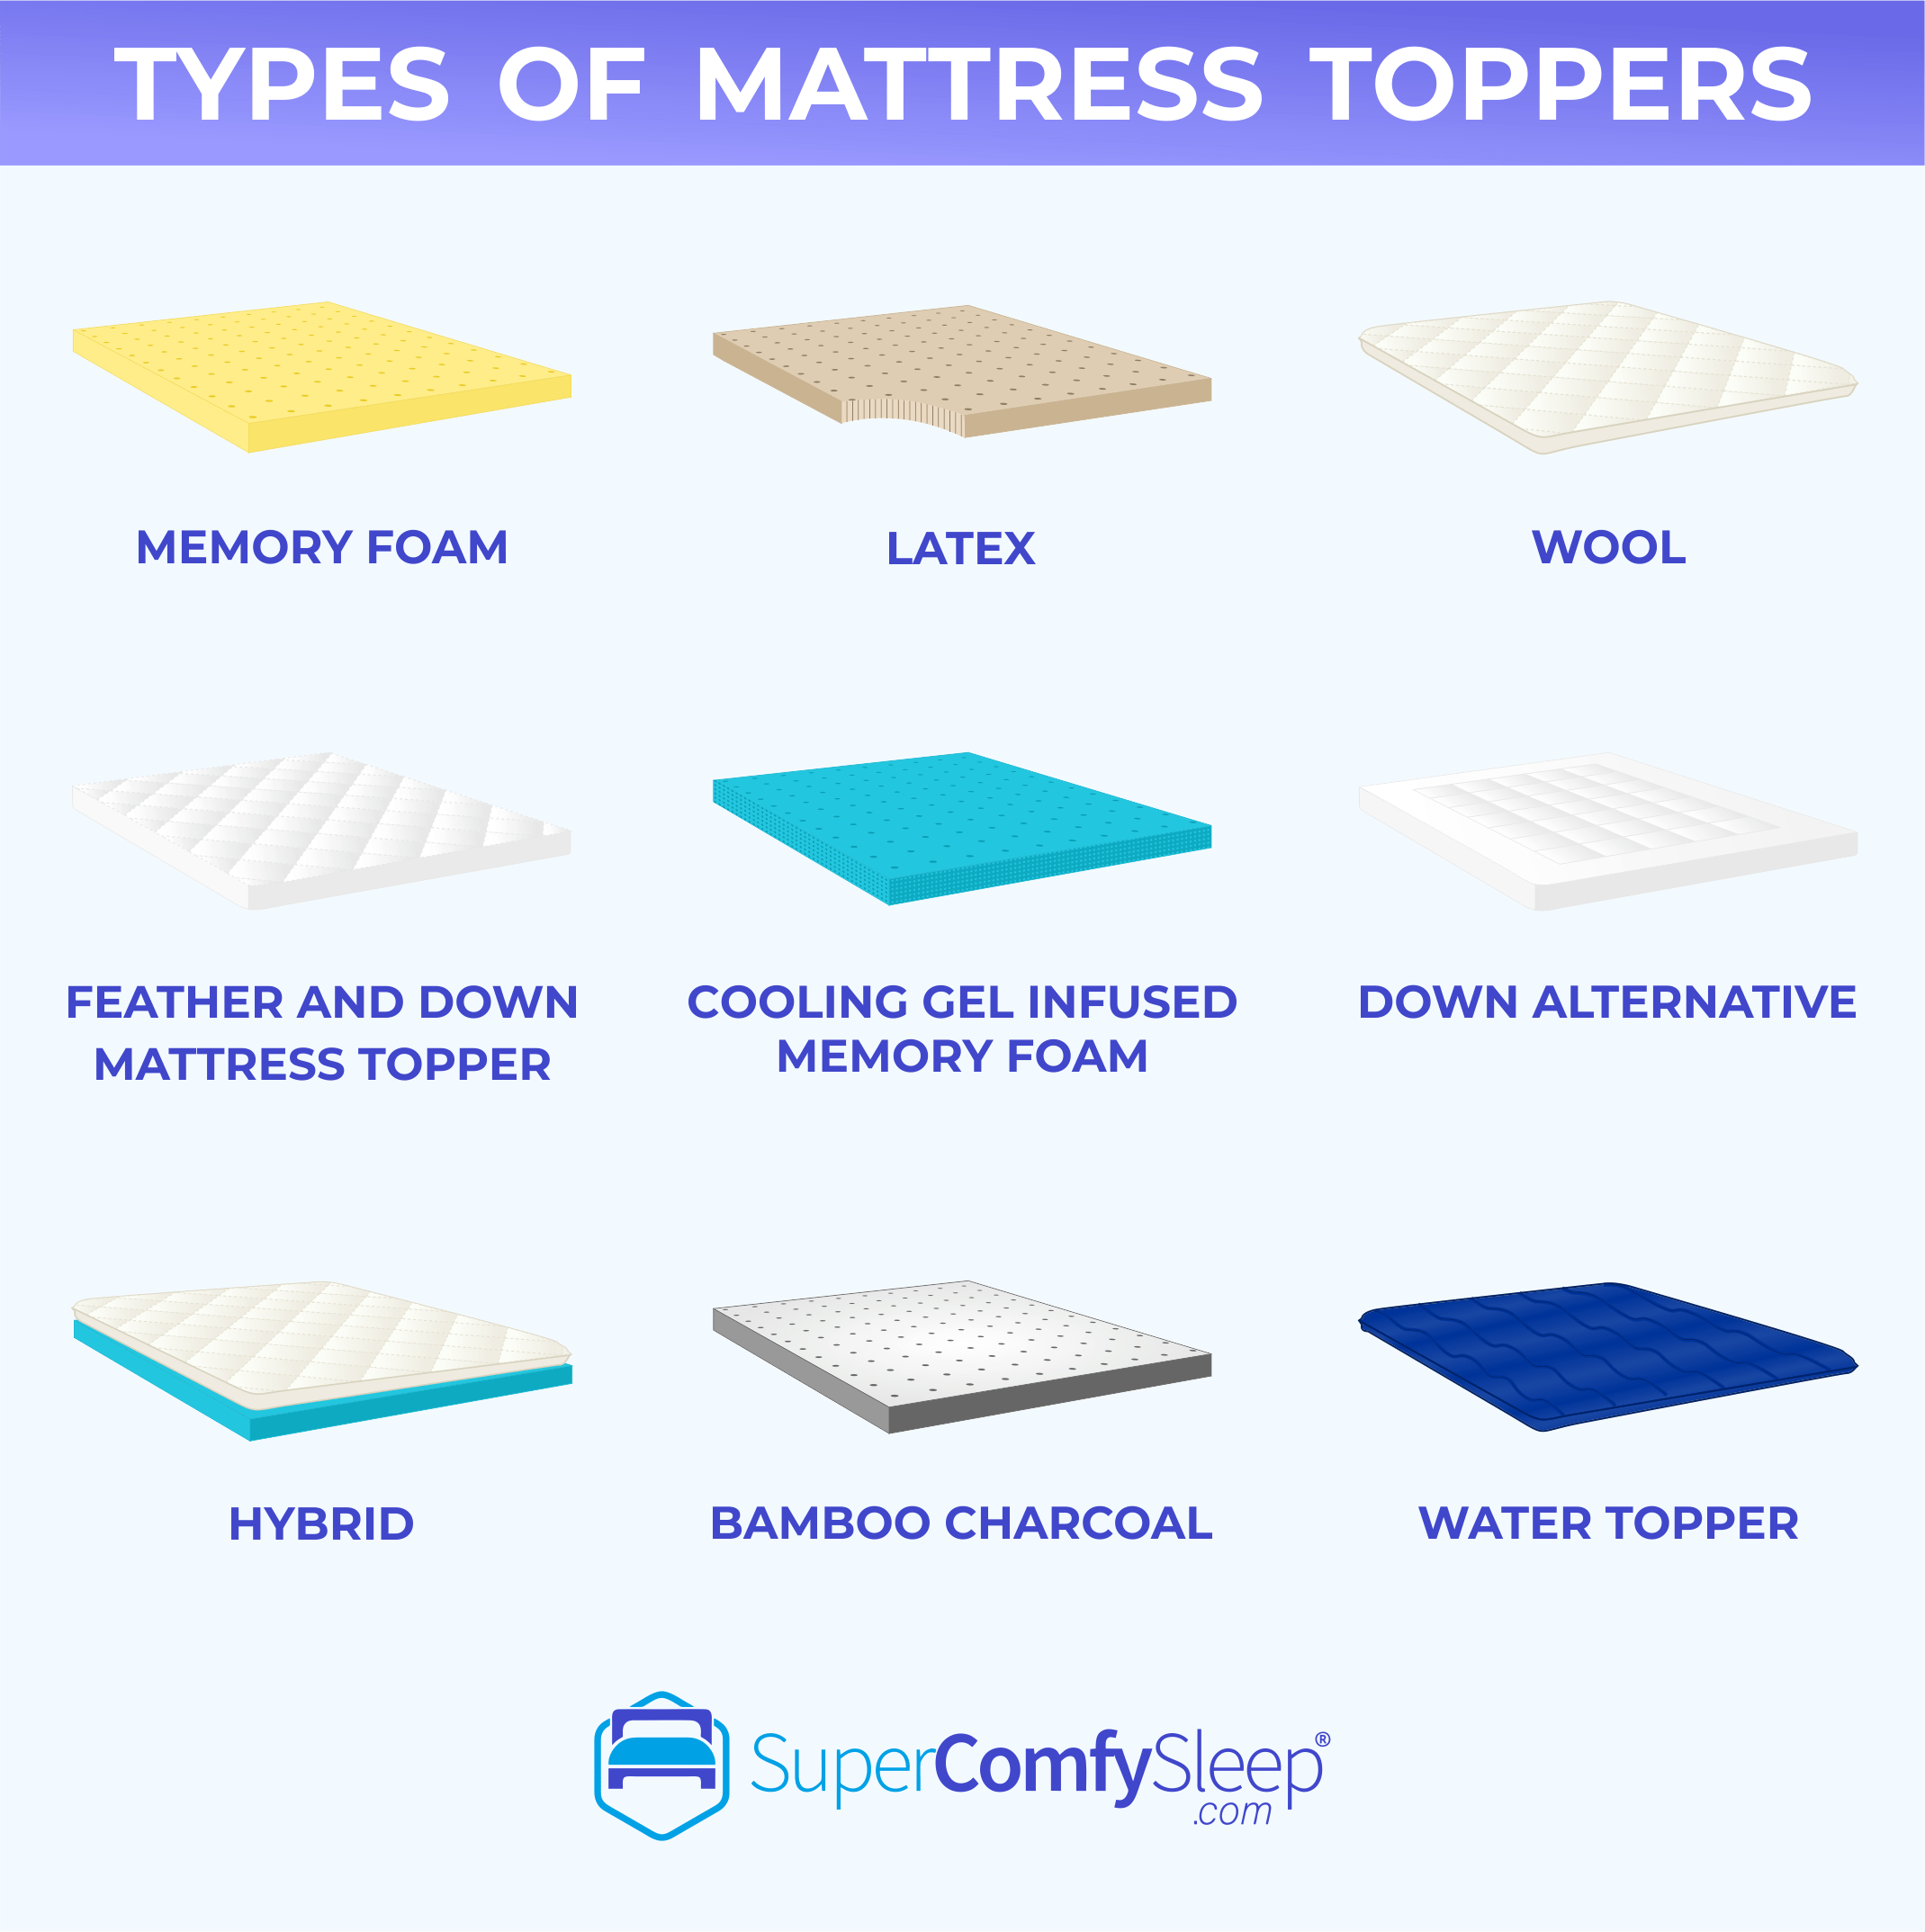 What Kind of Mattress Topper Should I Get?